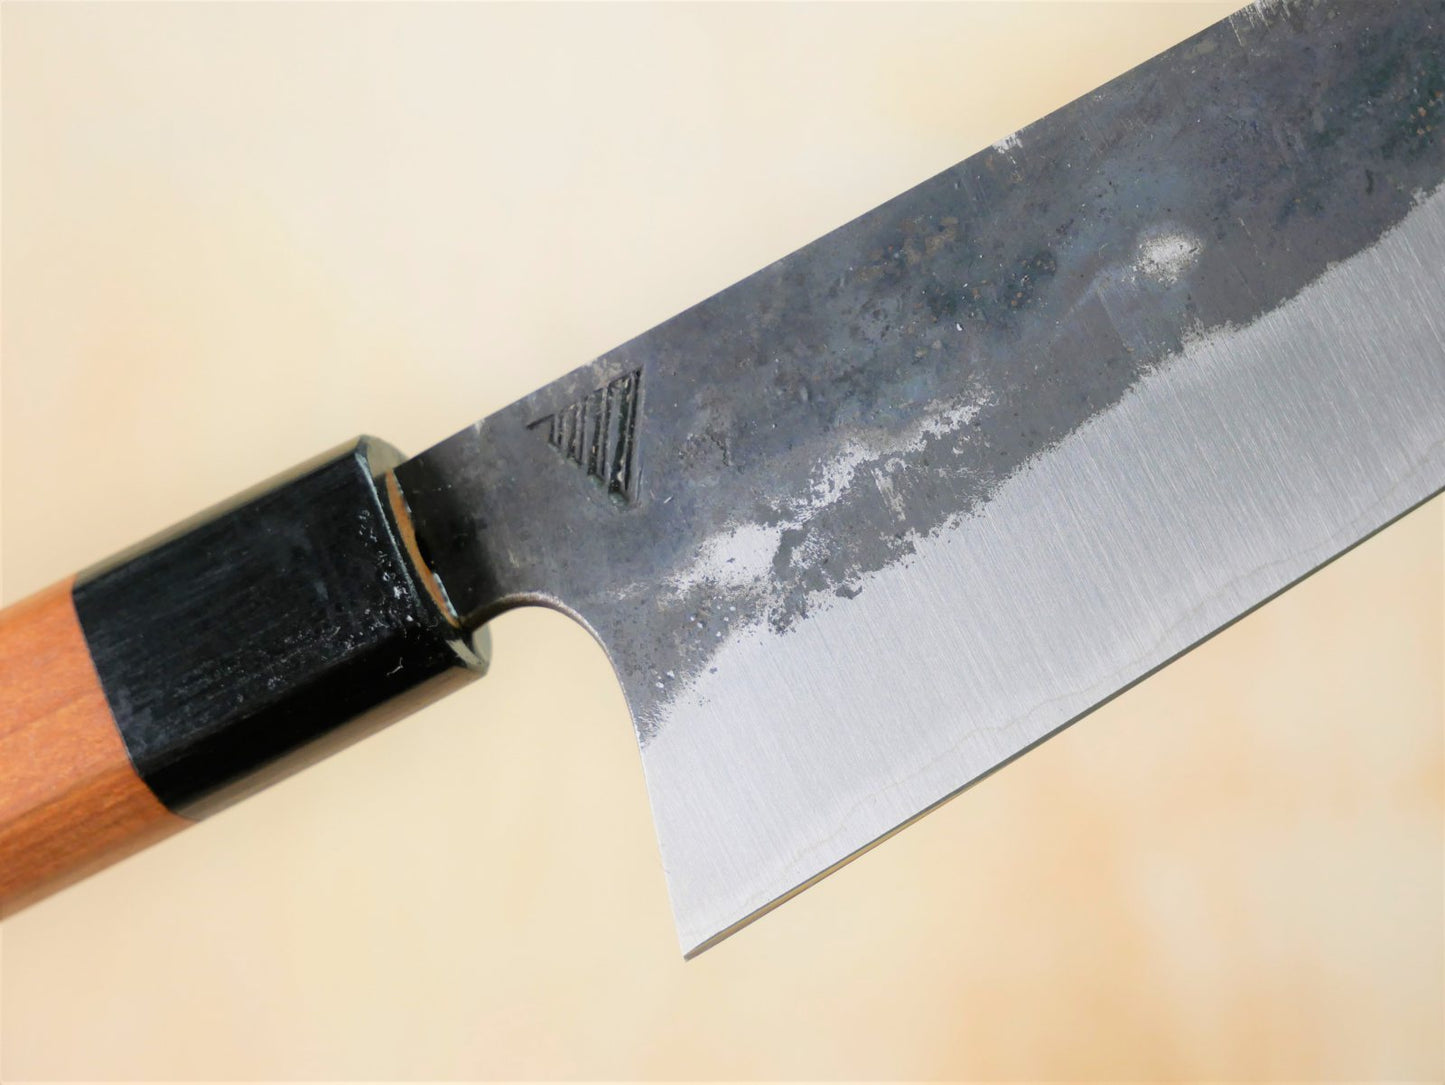 Maker's mark on blade face of kurouchi gyuto forged by Asano Fusataro